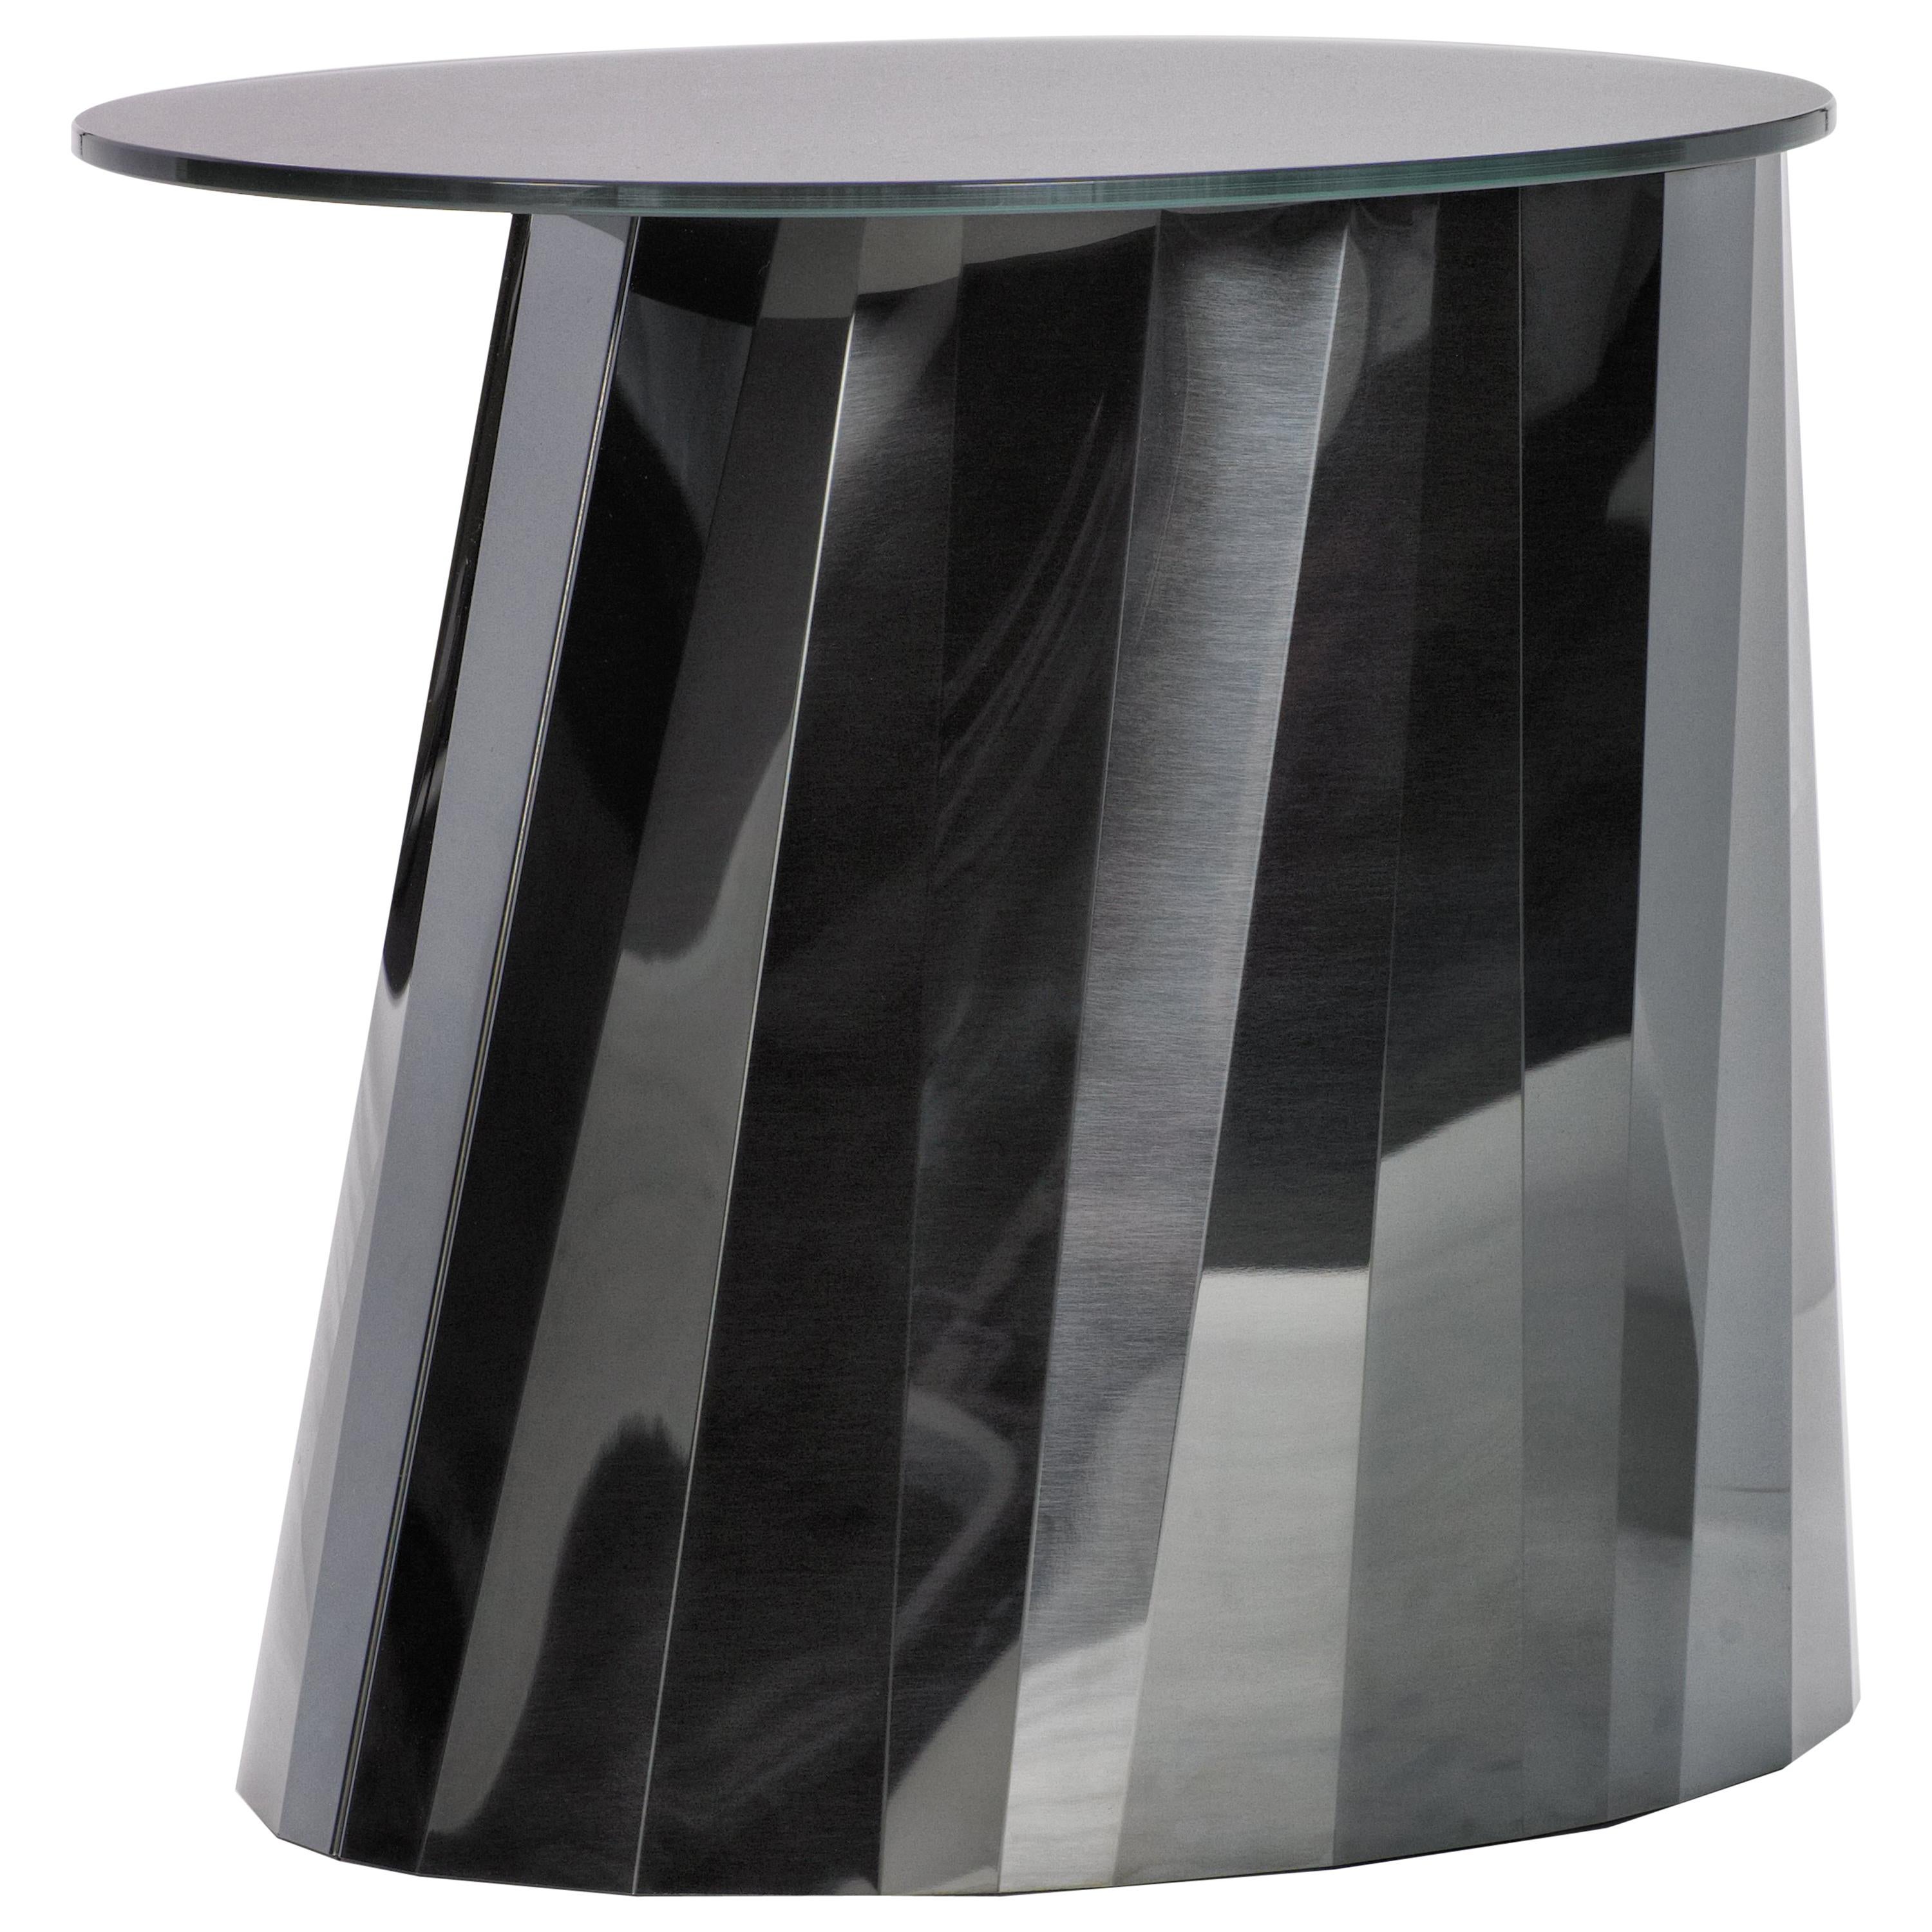 ClassiCon Pli Low Side Table in Black by Victoria Wilmotte